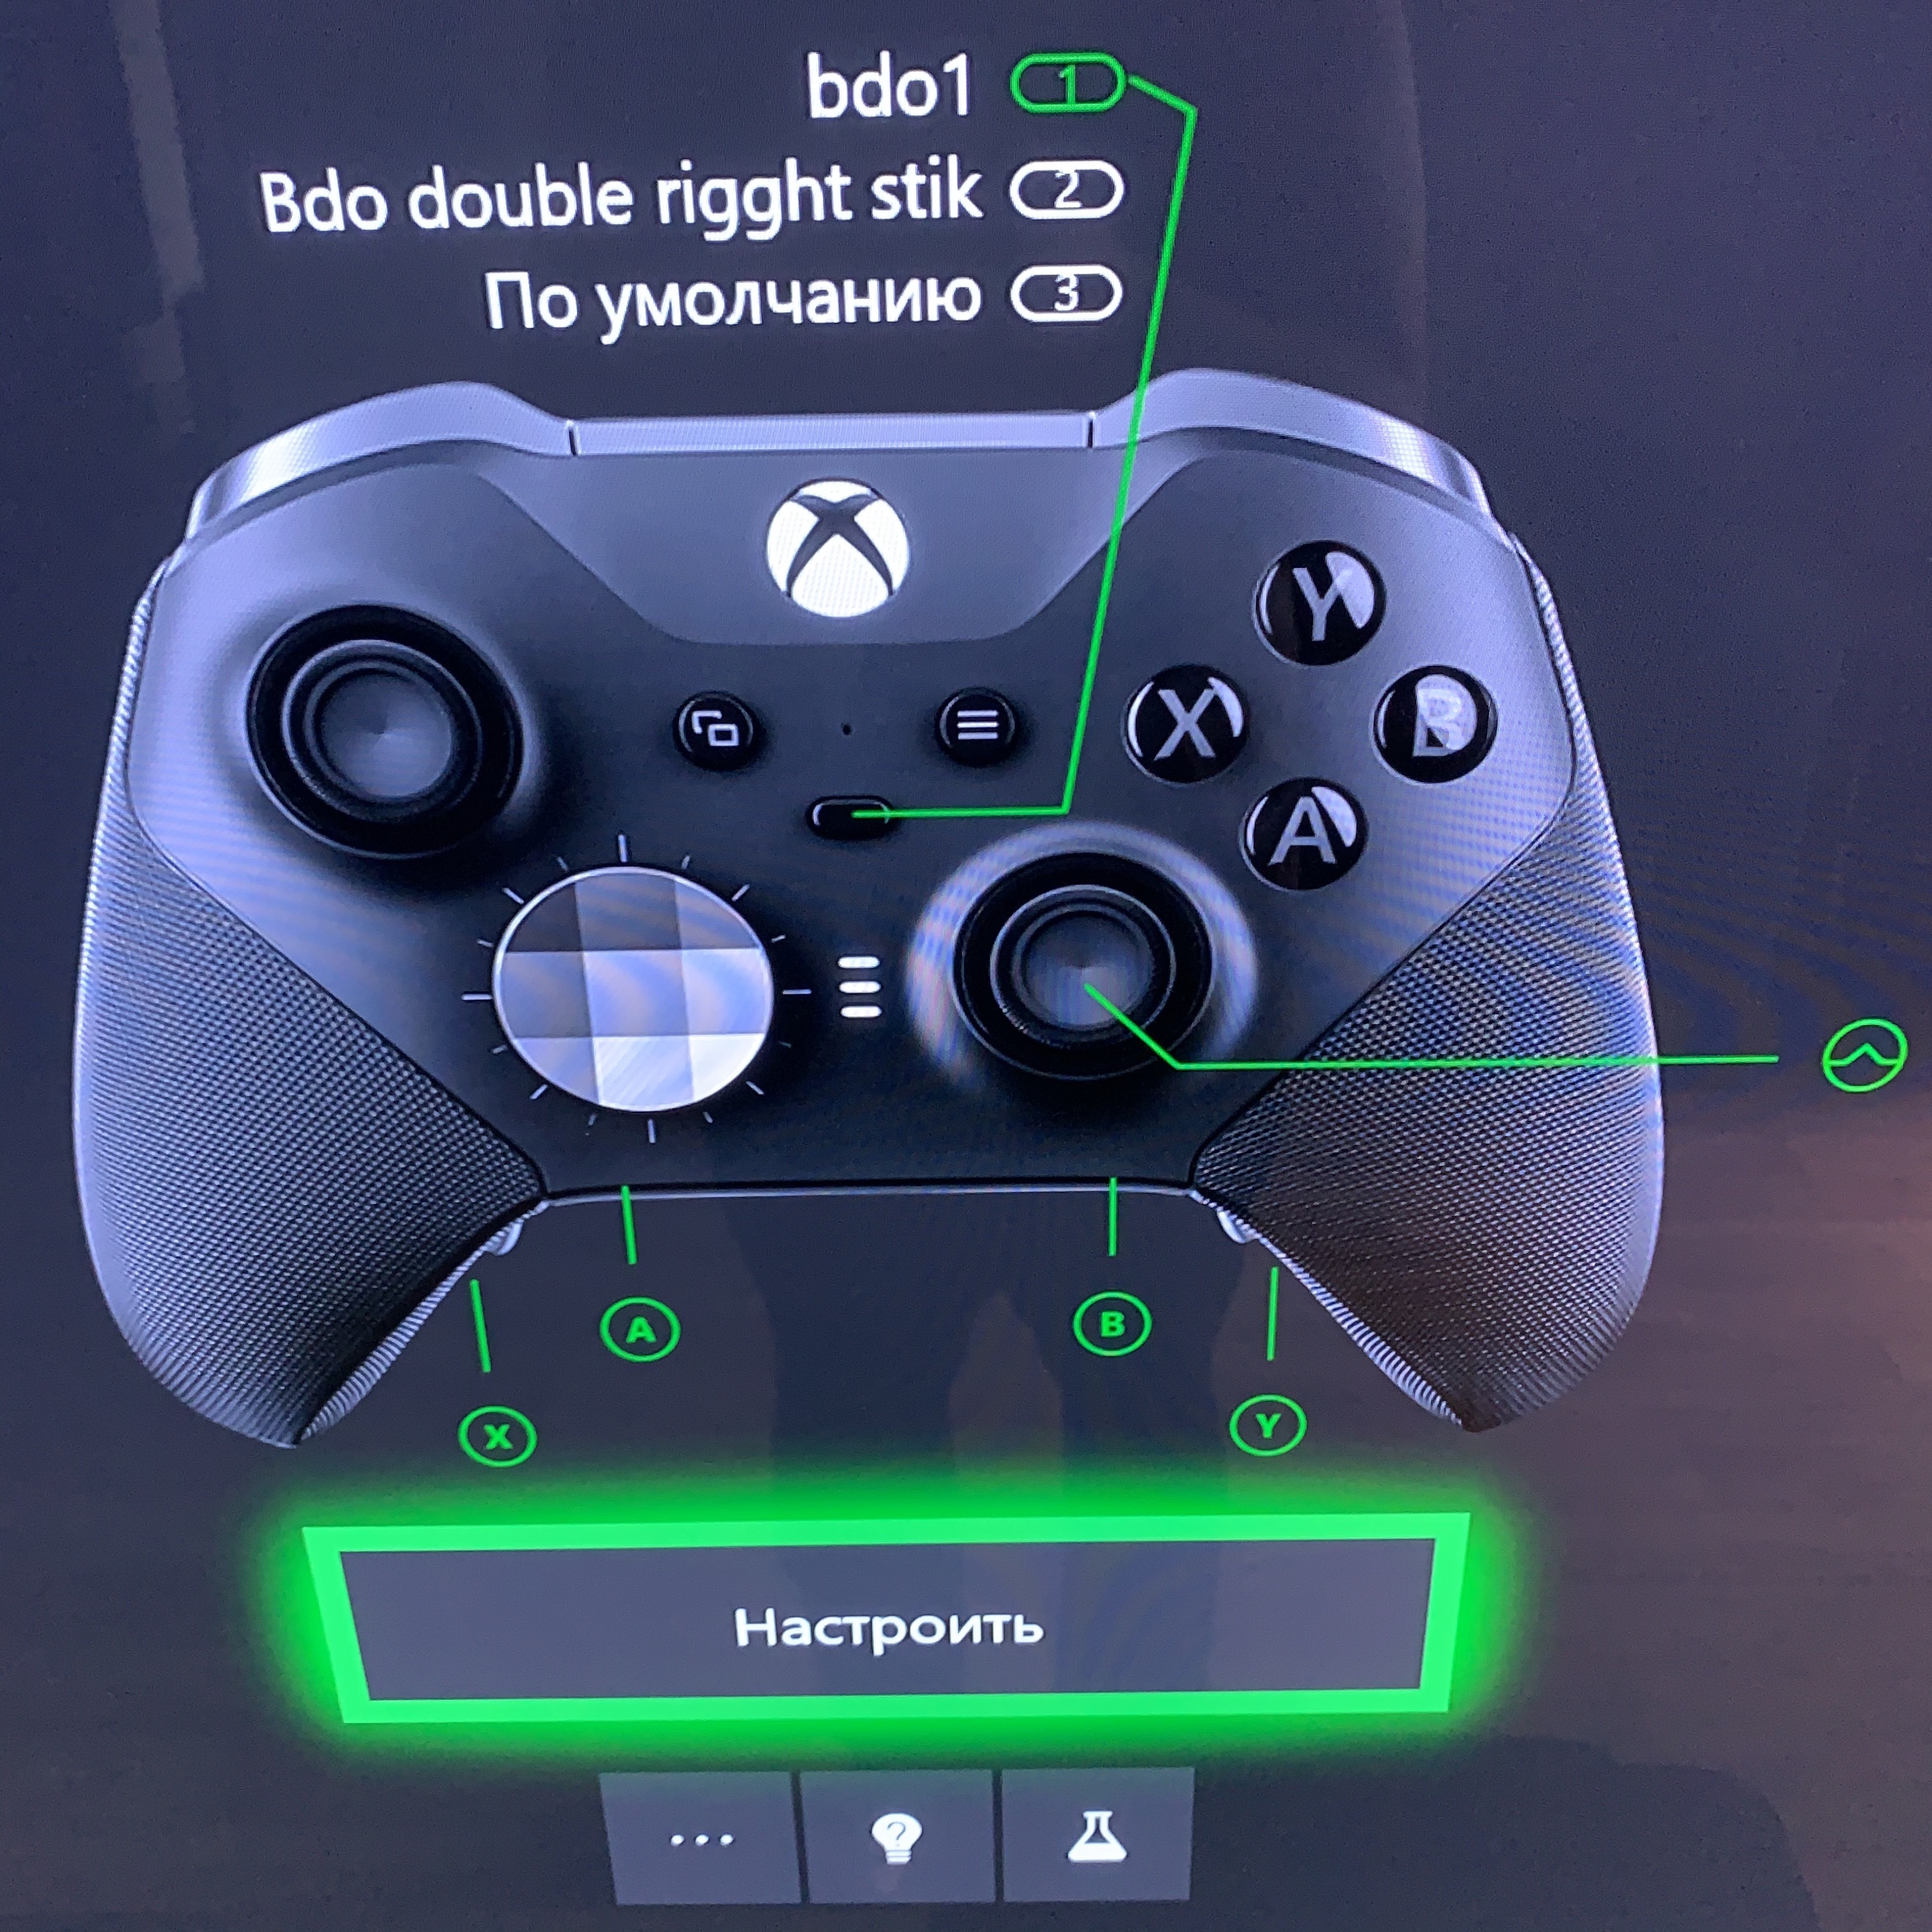 Как включить джойстик на пс. X360ce Dualshock 4. Xbox 360 подключить джойстик от ps4. Геймпад Xbox 360 и ps3. Как подключить джойстик Xbox 360.